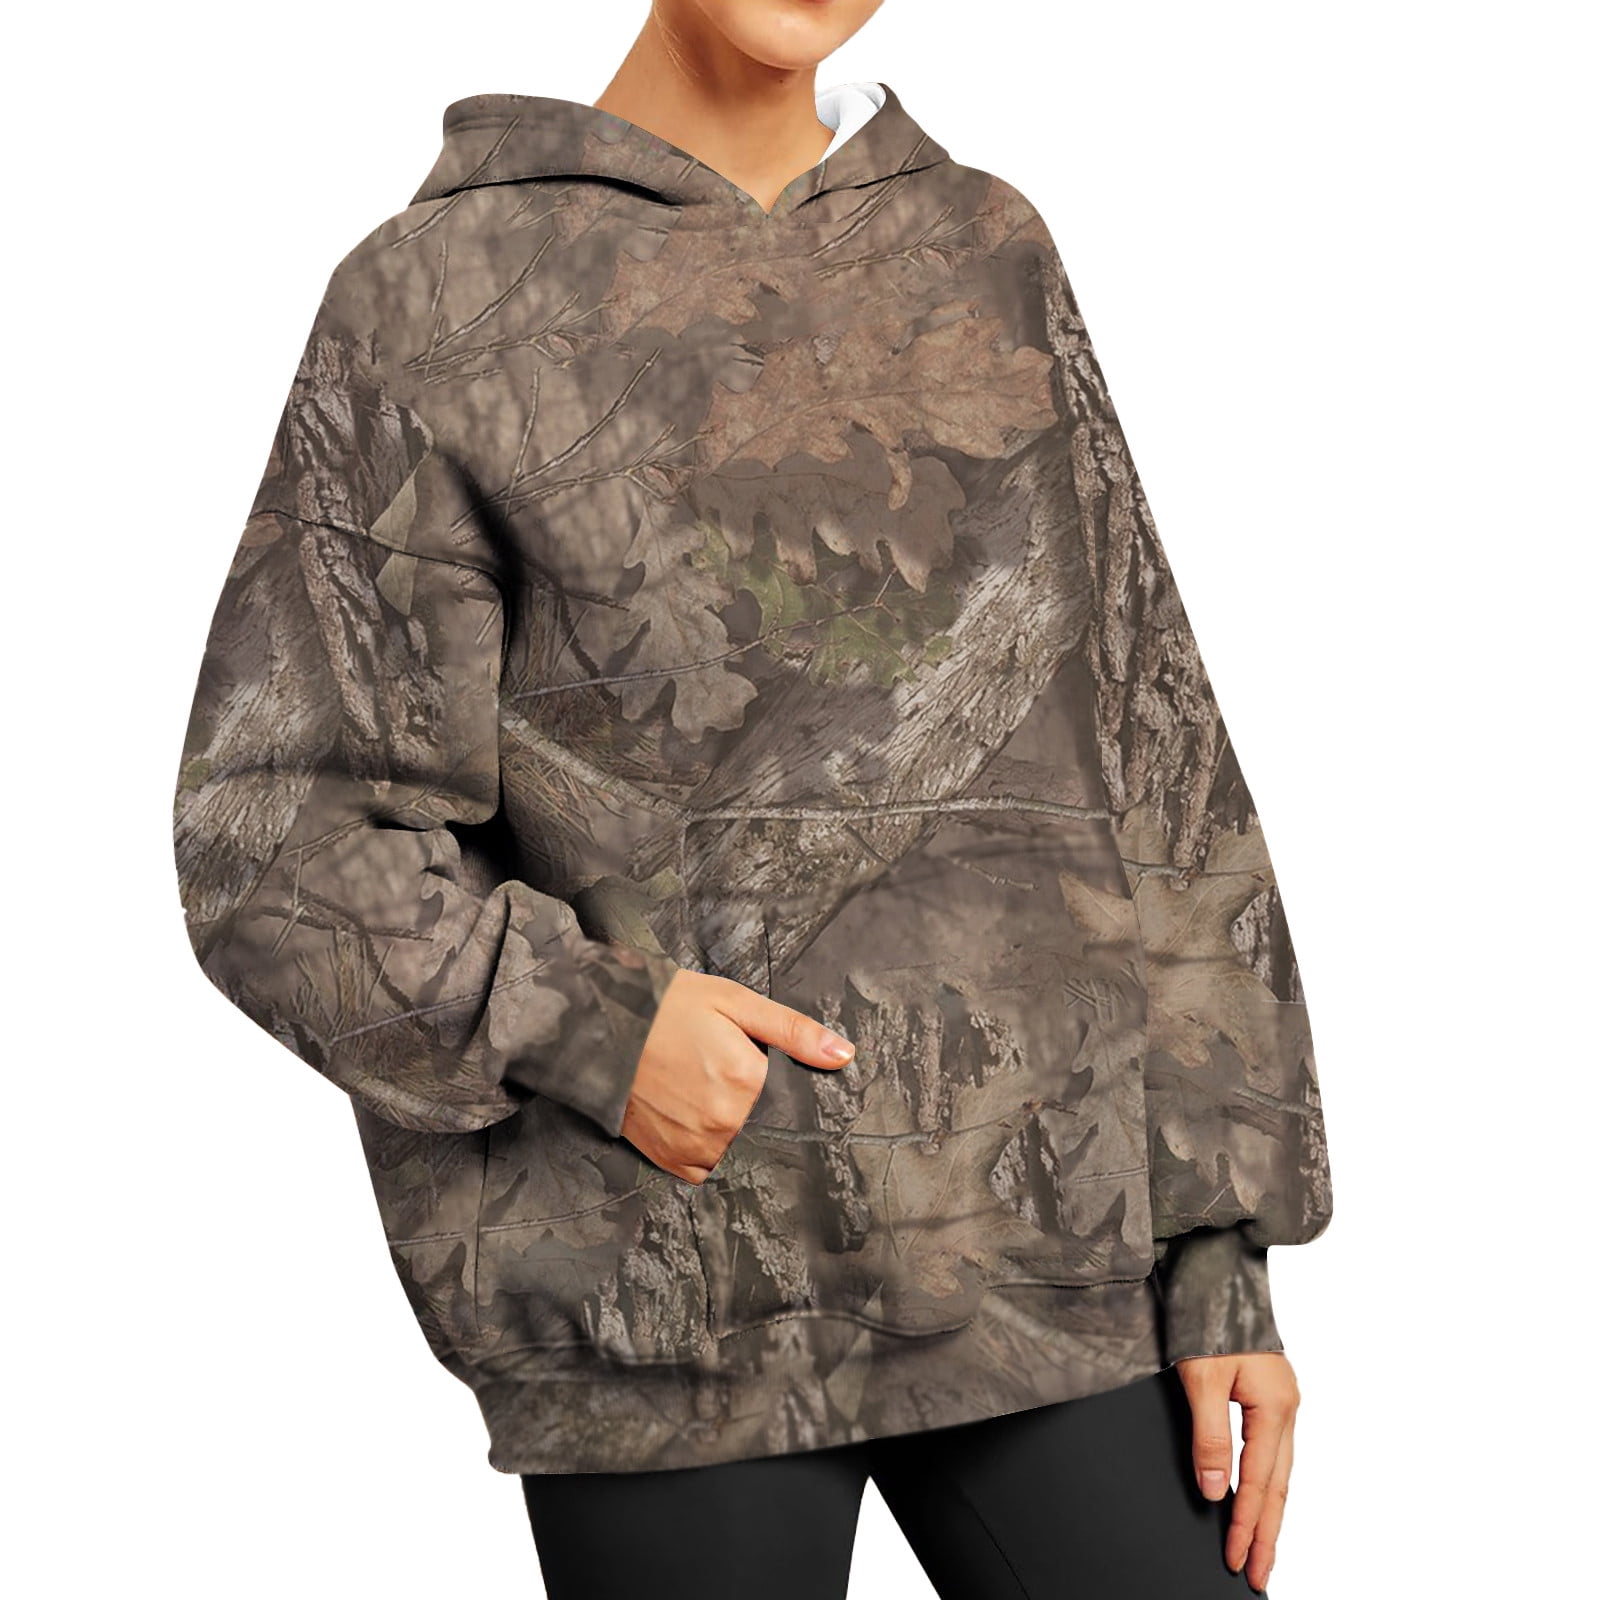 Sksloeg Women's Camo Hoodie Maple Leaf Print Oversized Sweatshirt